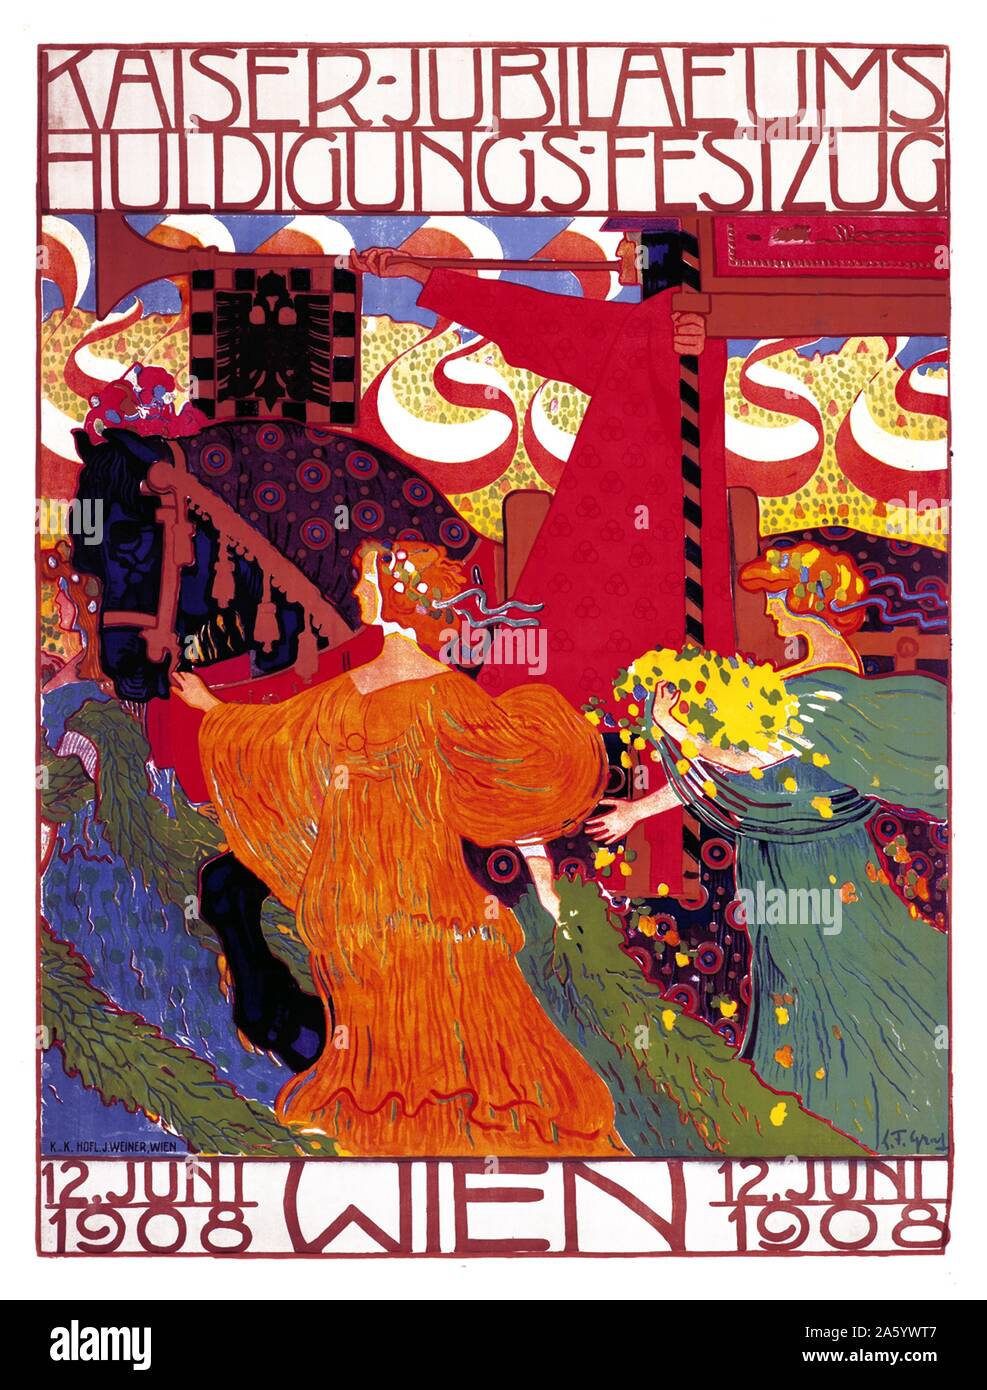 Affiche de l'Kaiser-Jubiläums Huldigungs-Festzug- par Ludwig Ferdinand Graf (1868-1932) un peintre autrichien. Datée 1908 Banque D'Images